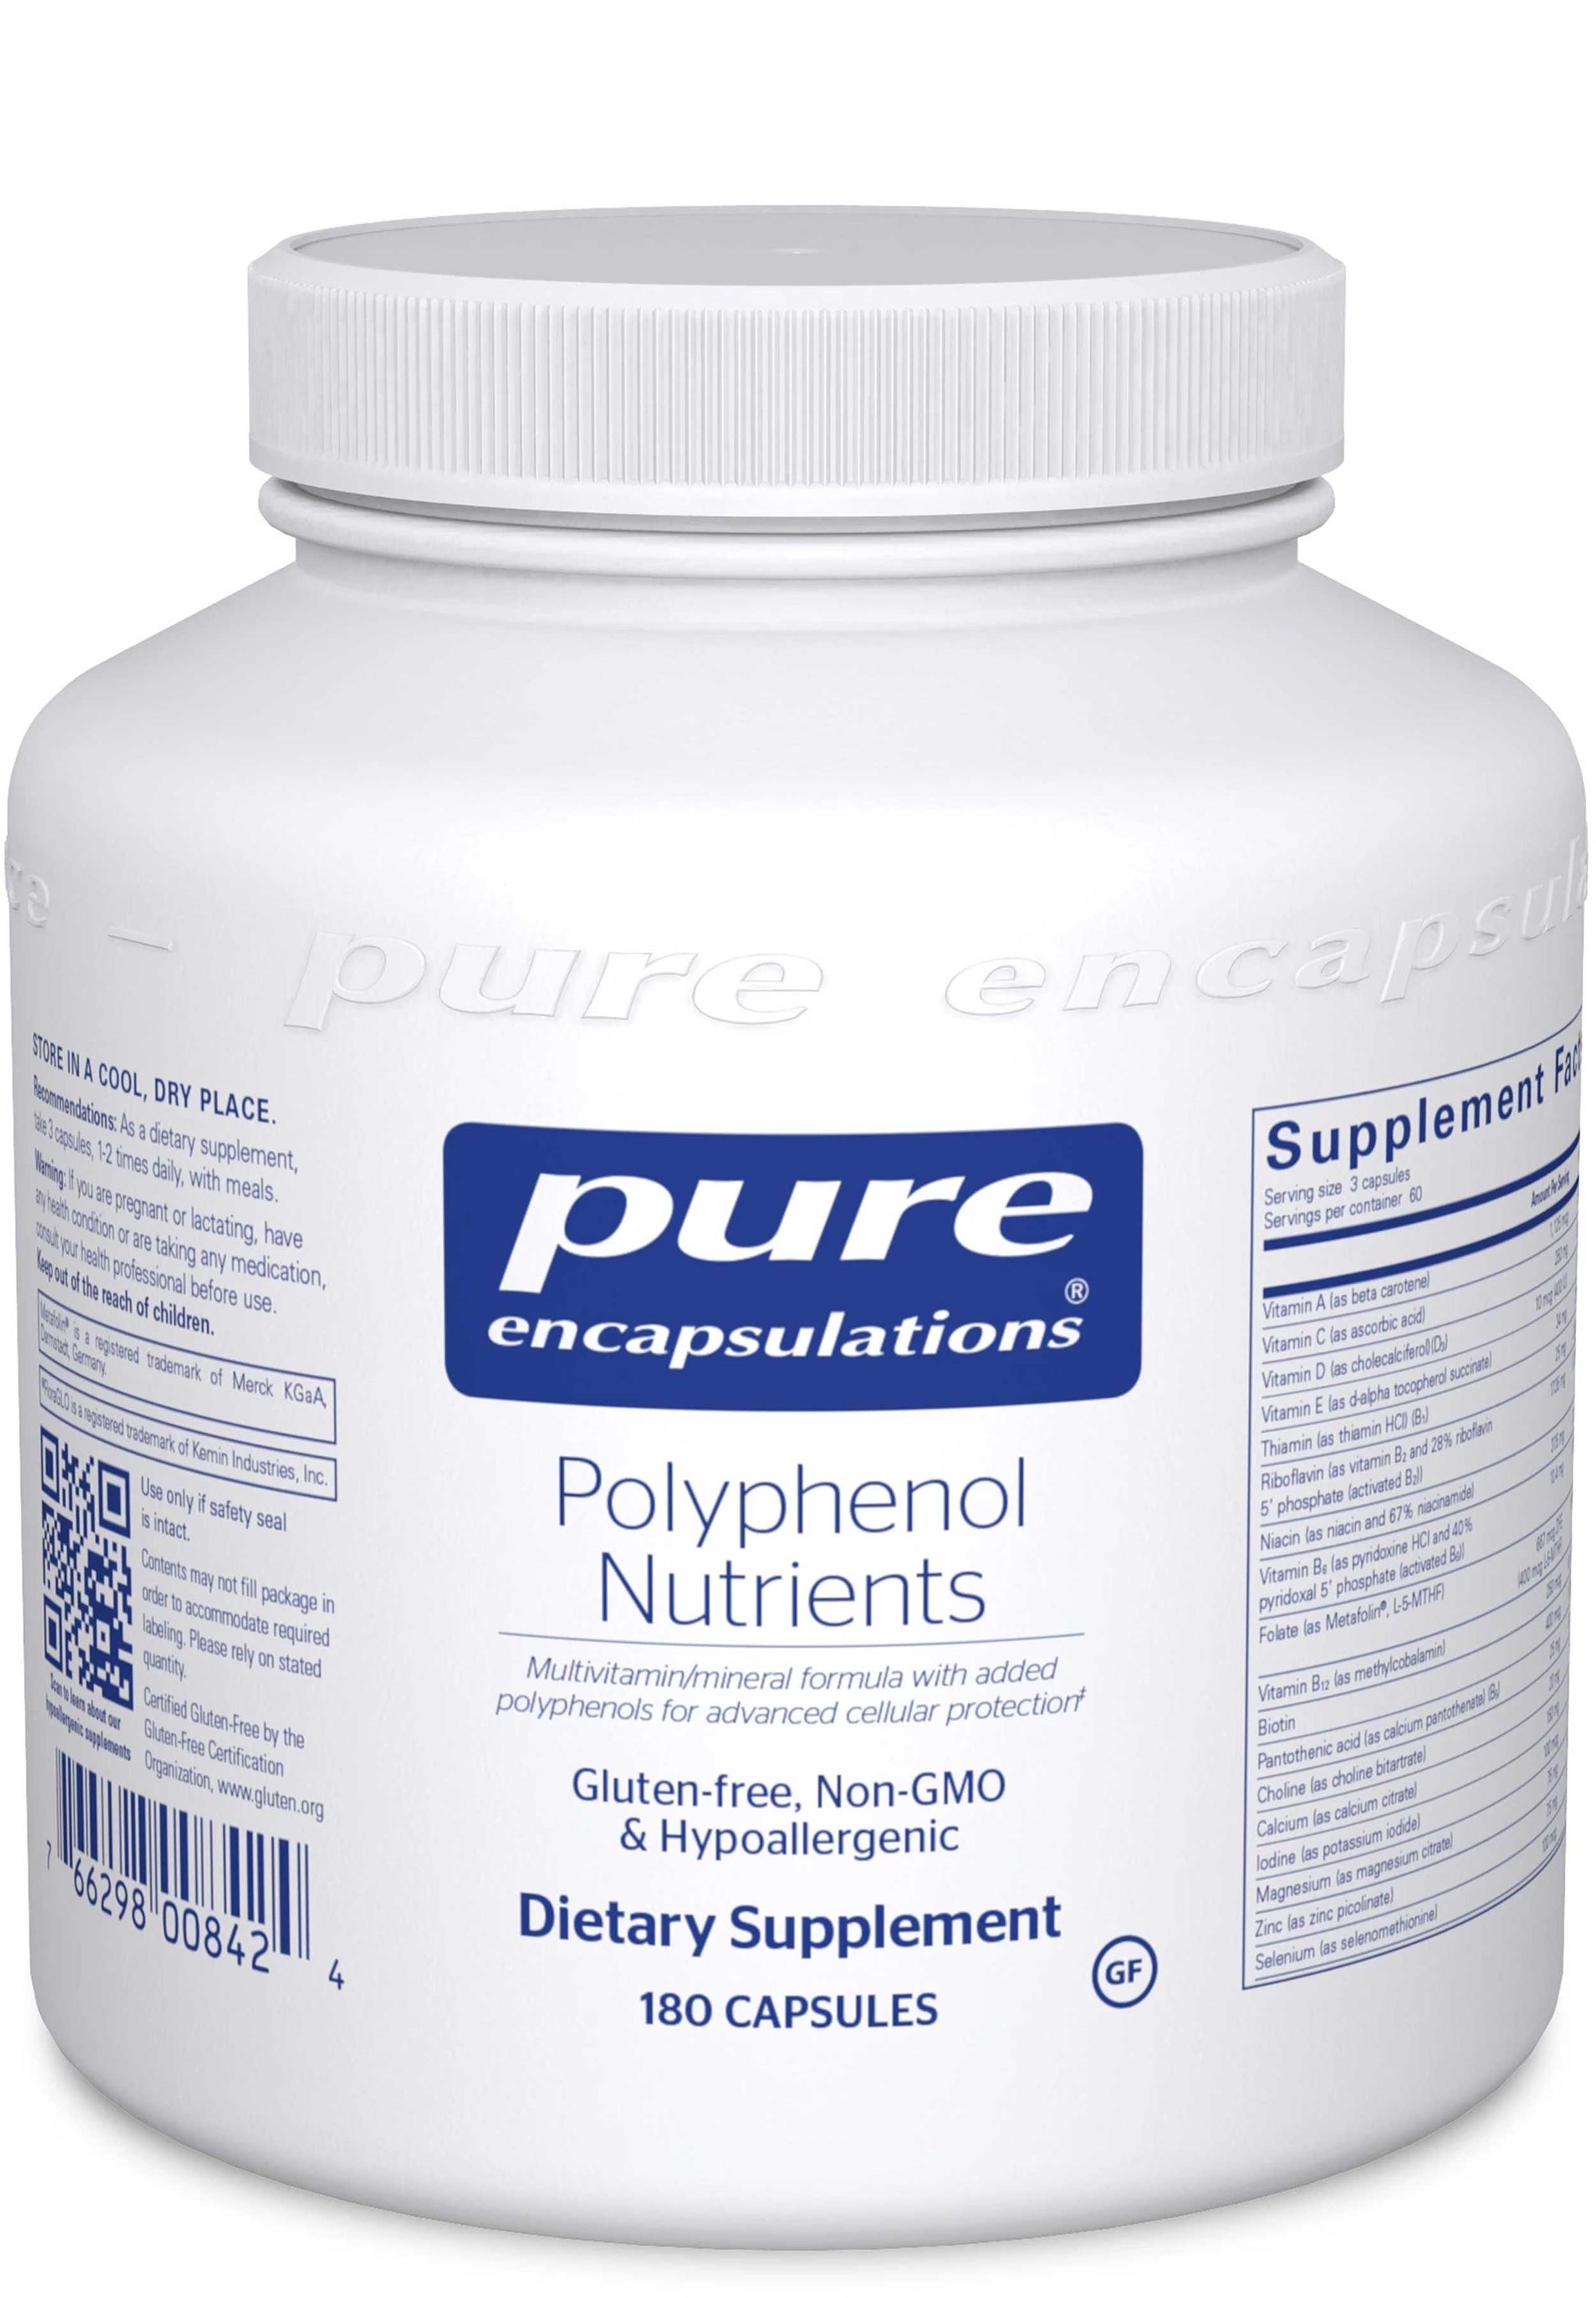 pure encapsulations supplements